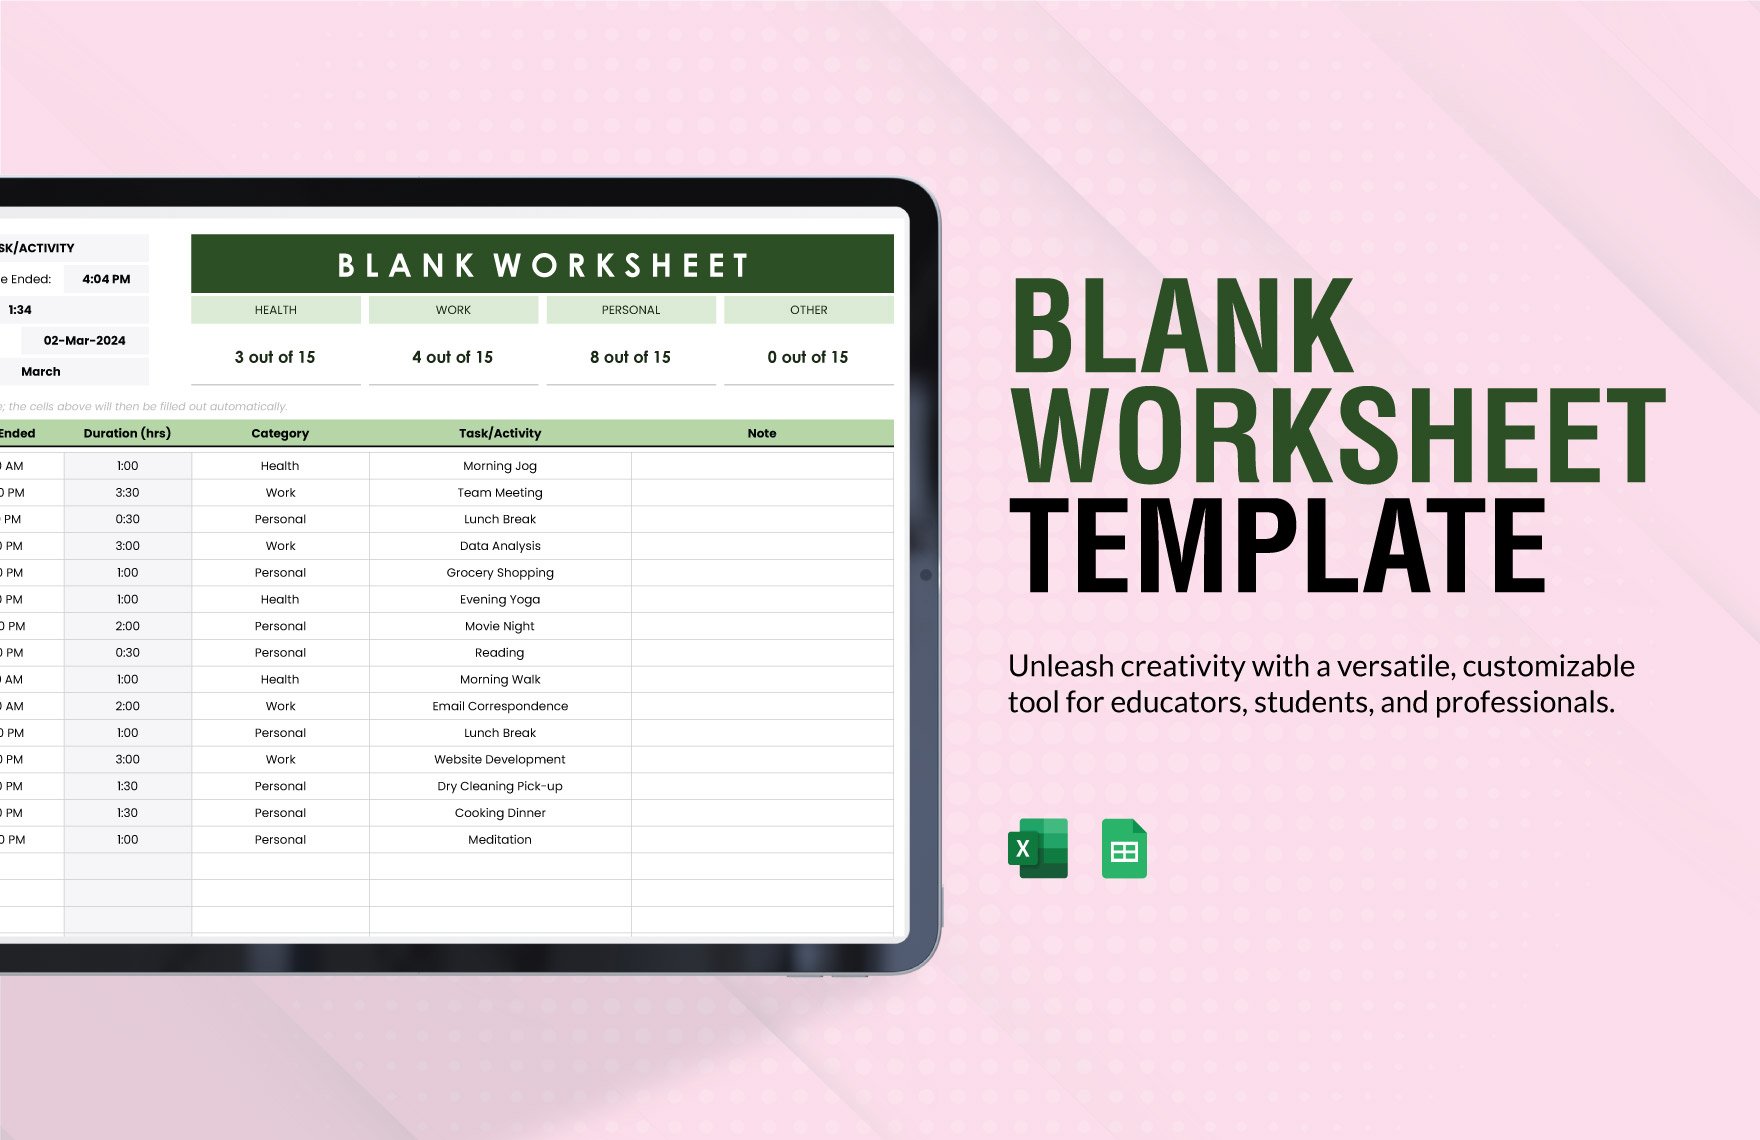 Blank Worksheet Template in Excel, Google Sheets